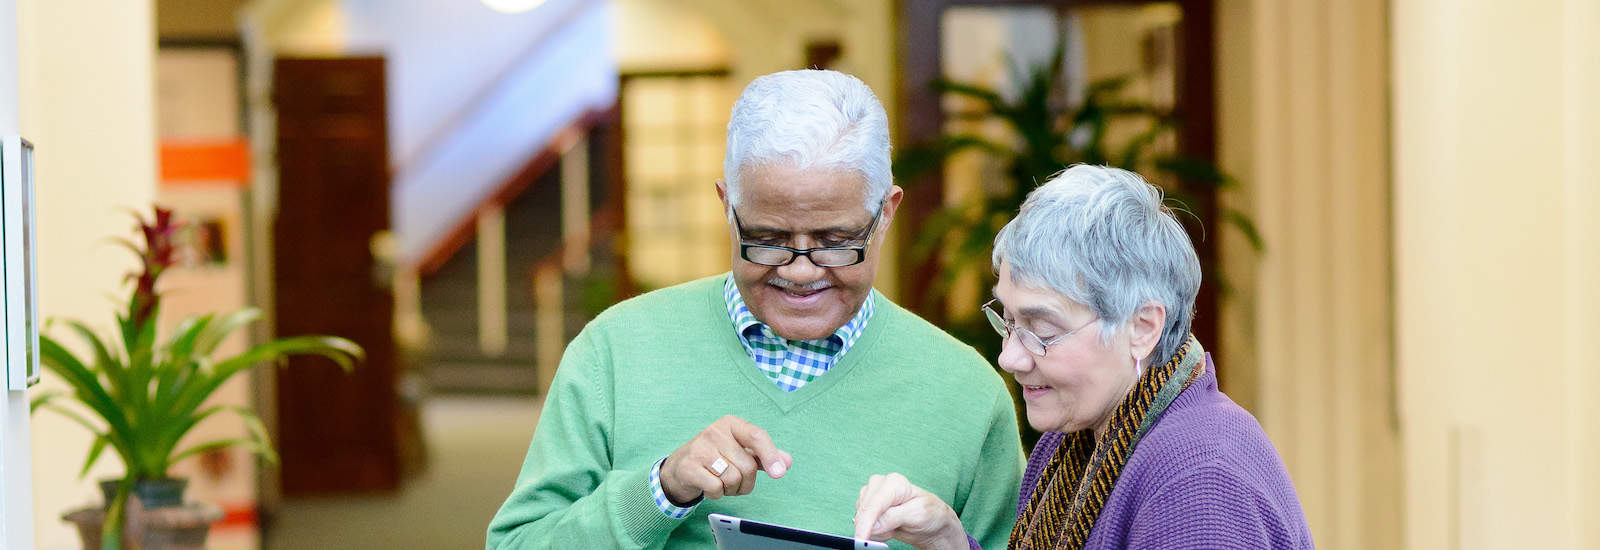 Senior living residents using an ipad